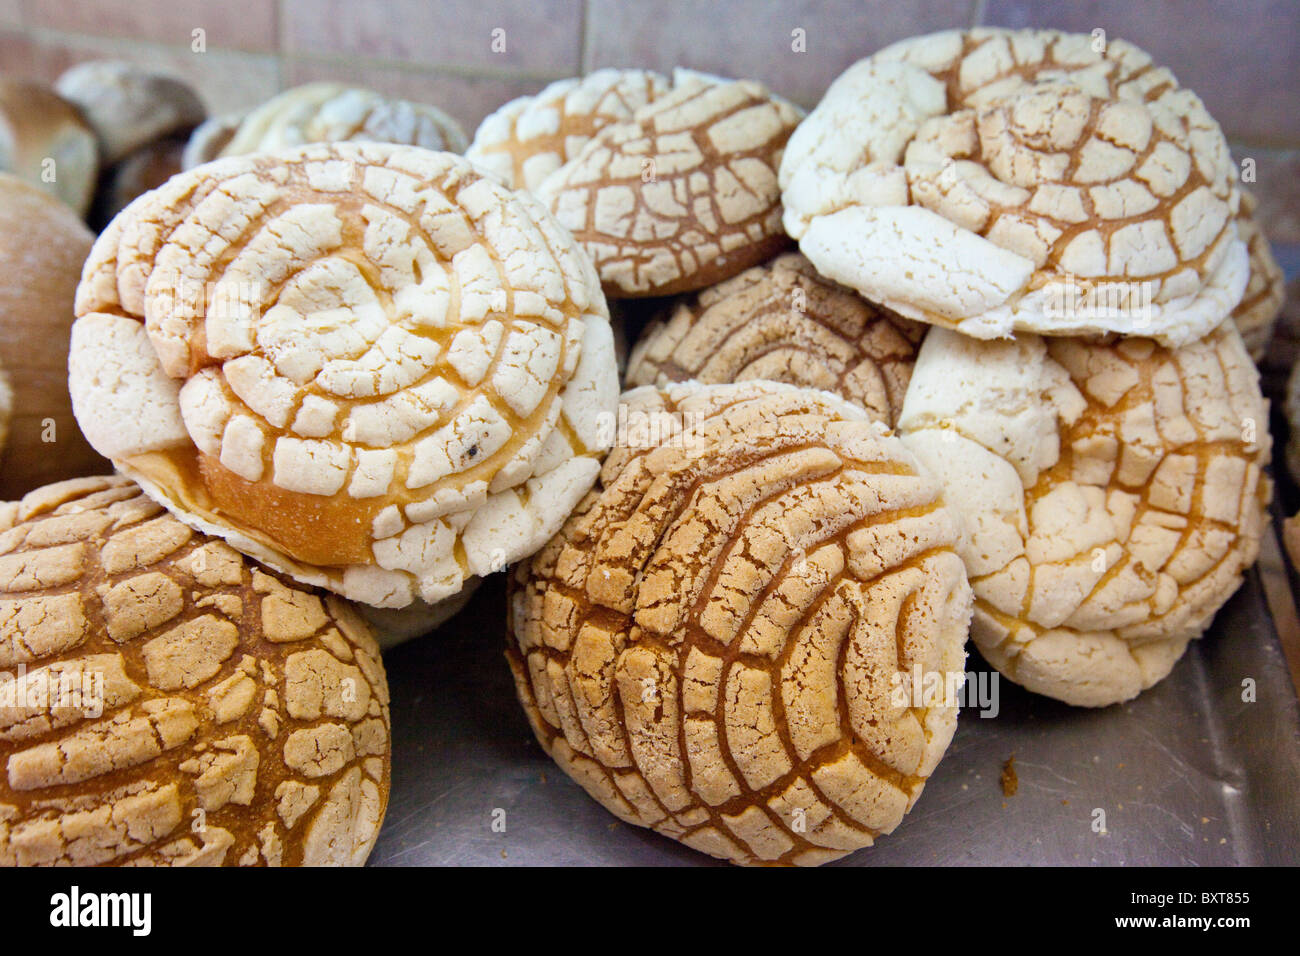 Conchas oder mexikanischen süßes Brot in einer Bäckerei in Coyoacán ...